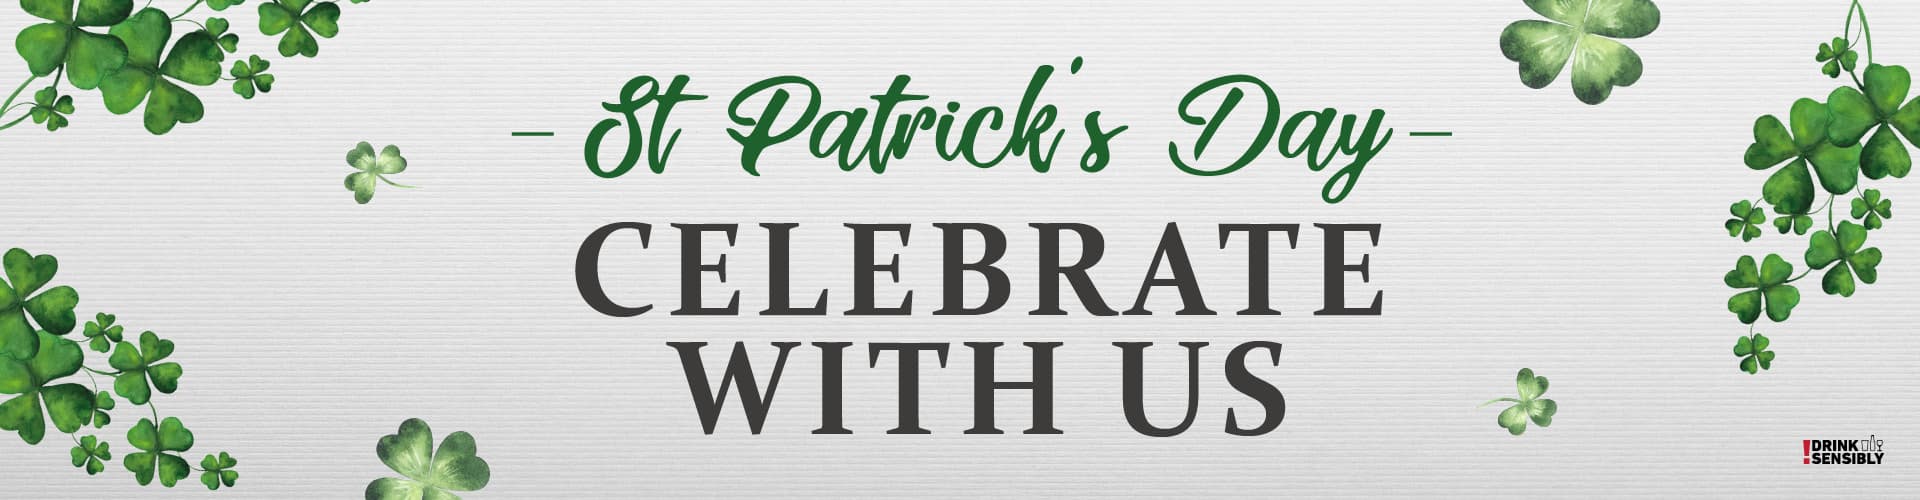 Celebrate St Patrick's Day in Sutton